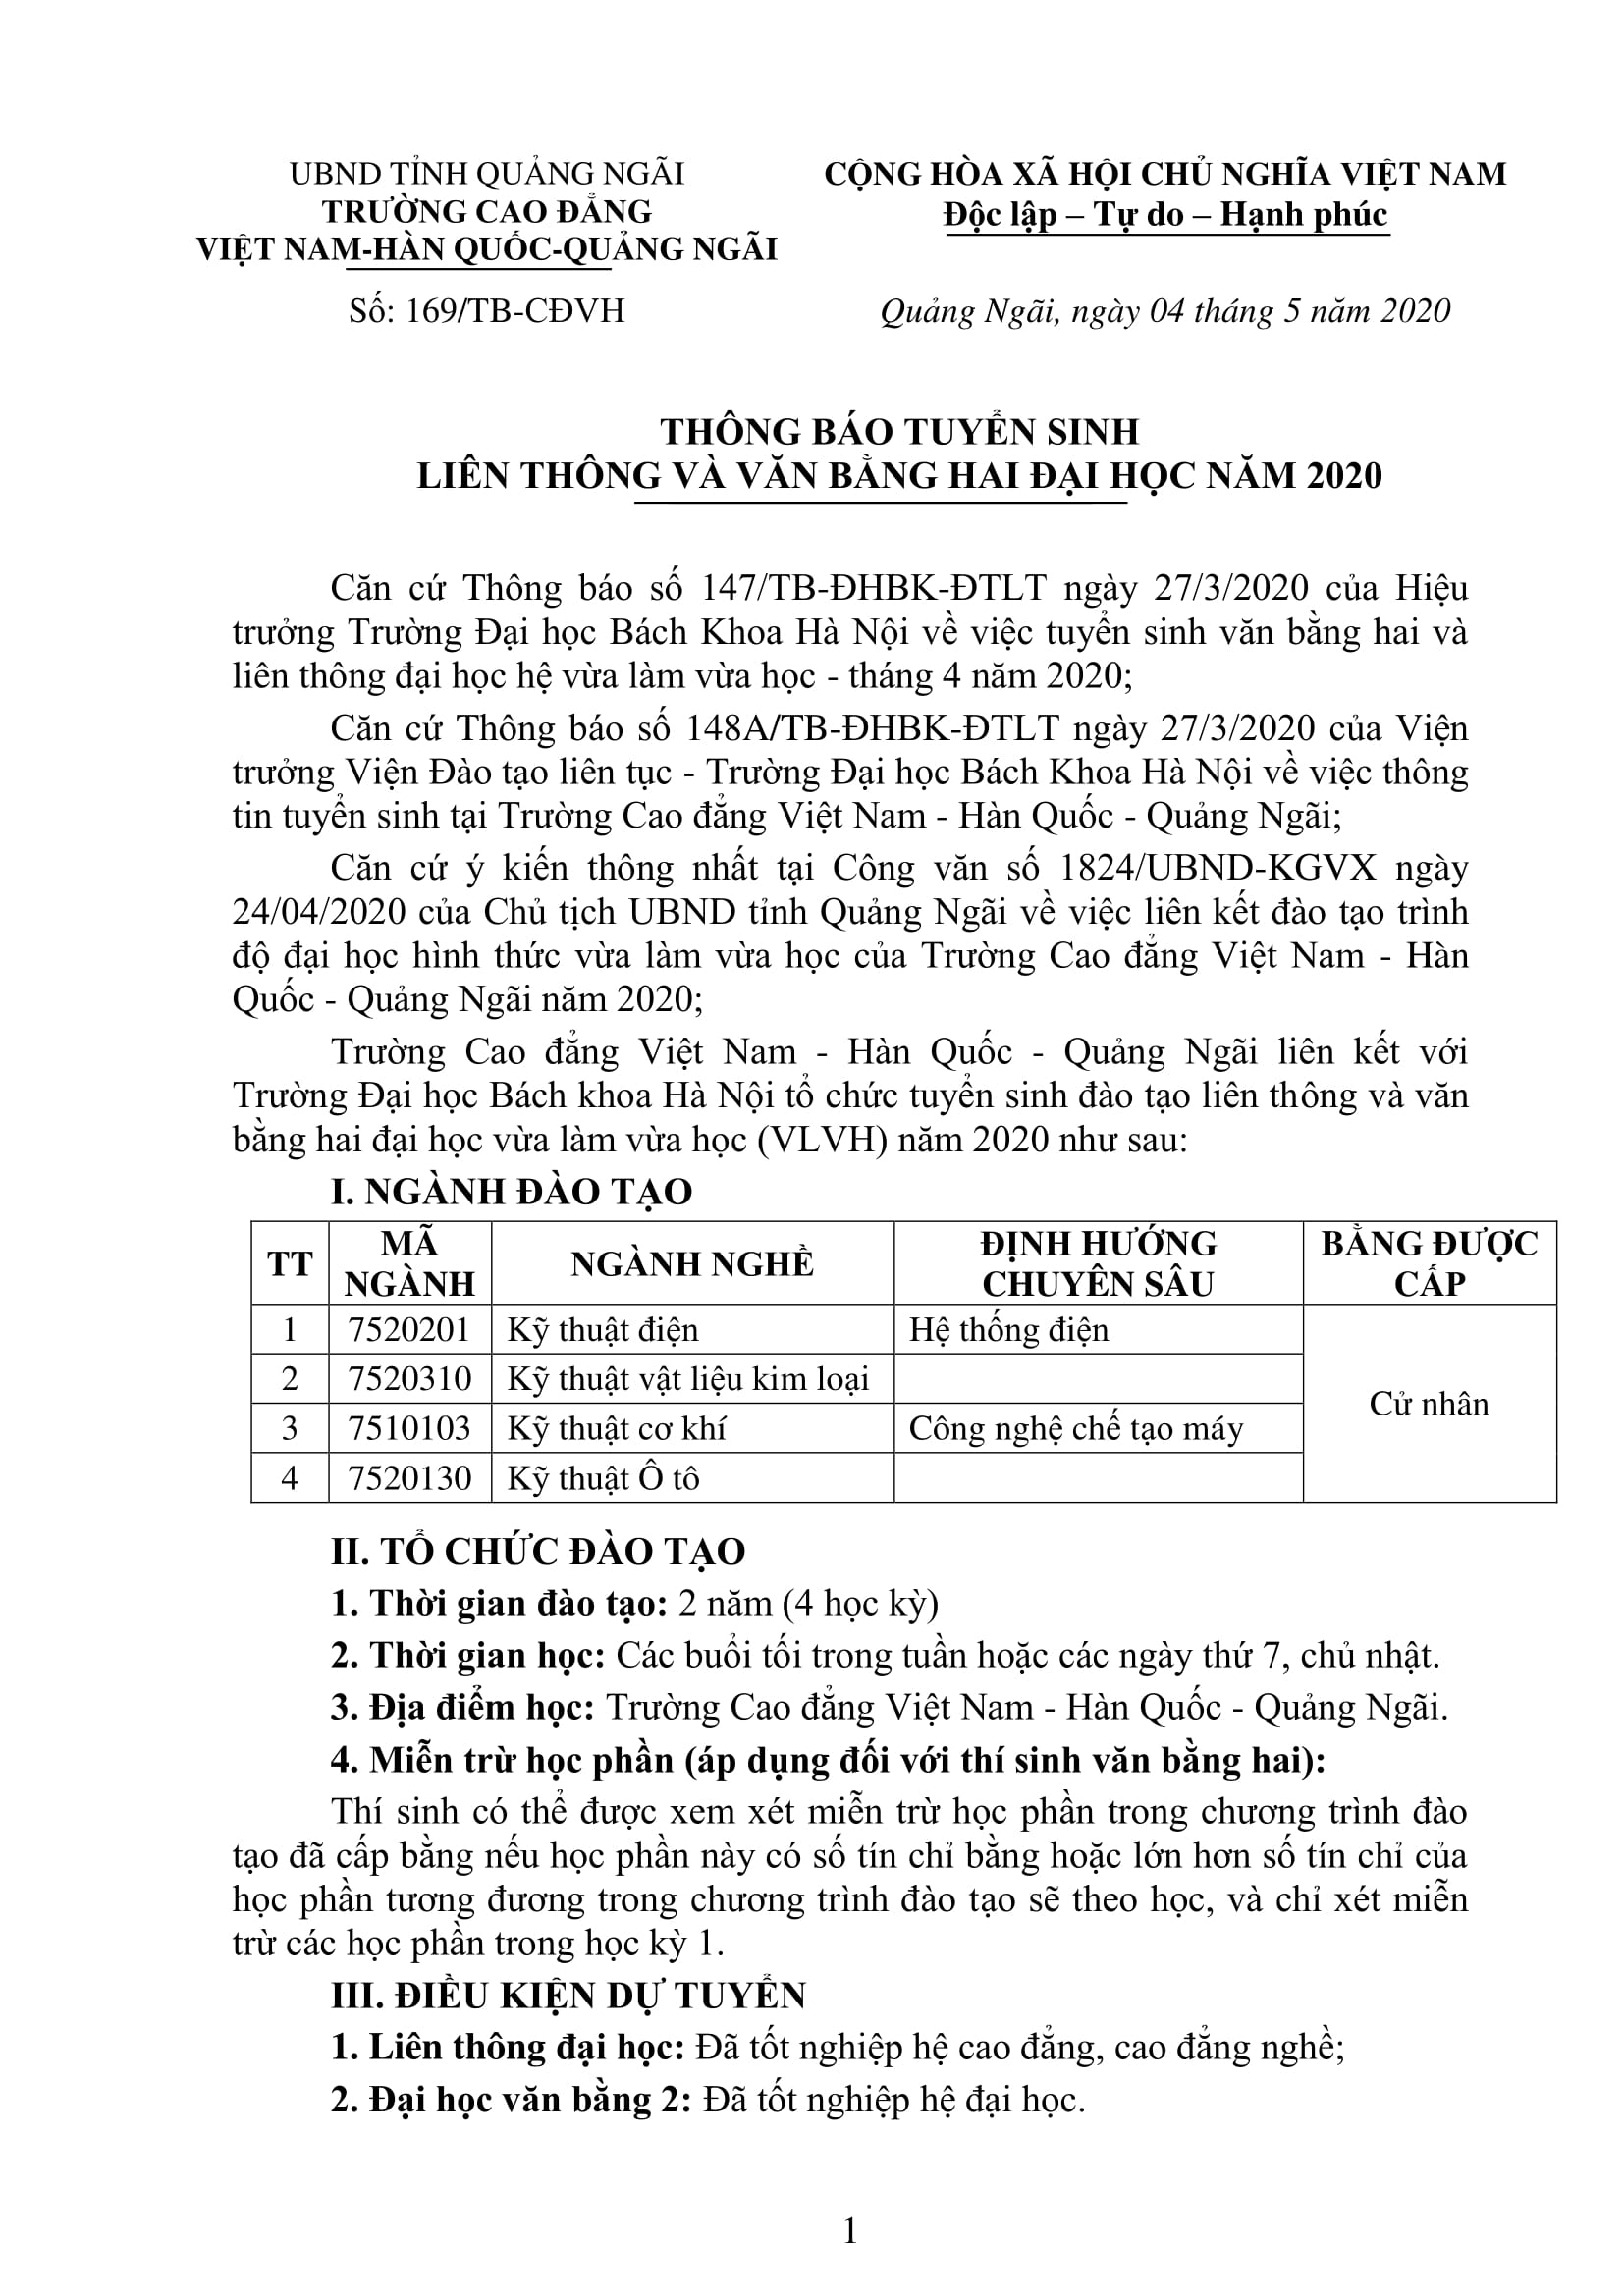 169-TB-CDVH THONG BAO TUYEN SINH LIEN THONG VA VAN BANG HAI DH -1.jpg